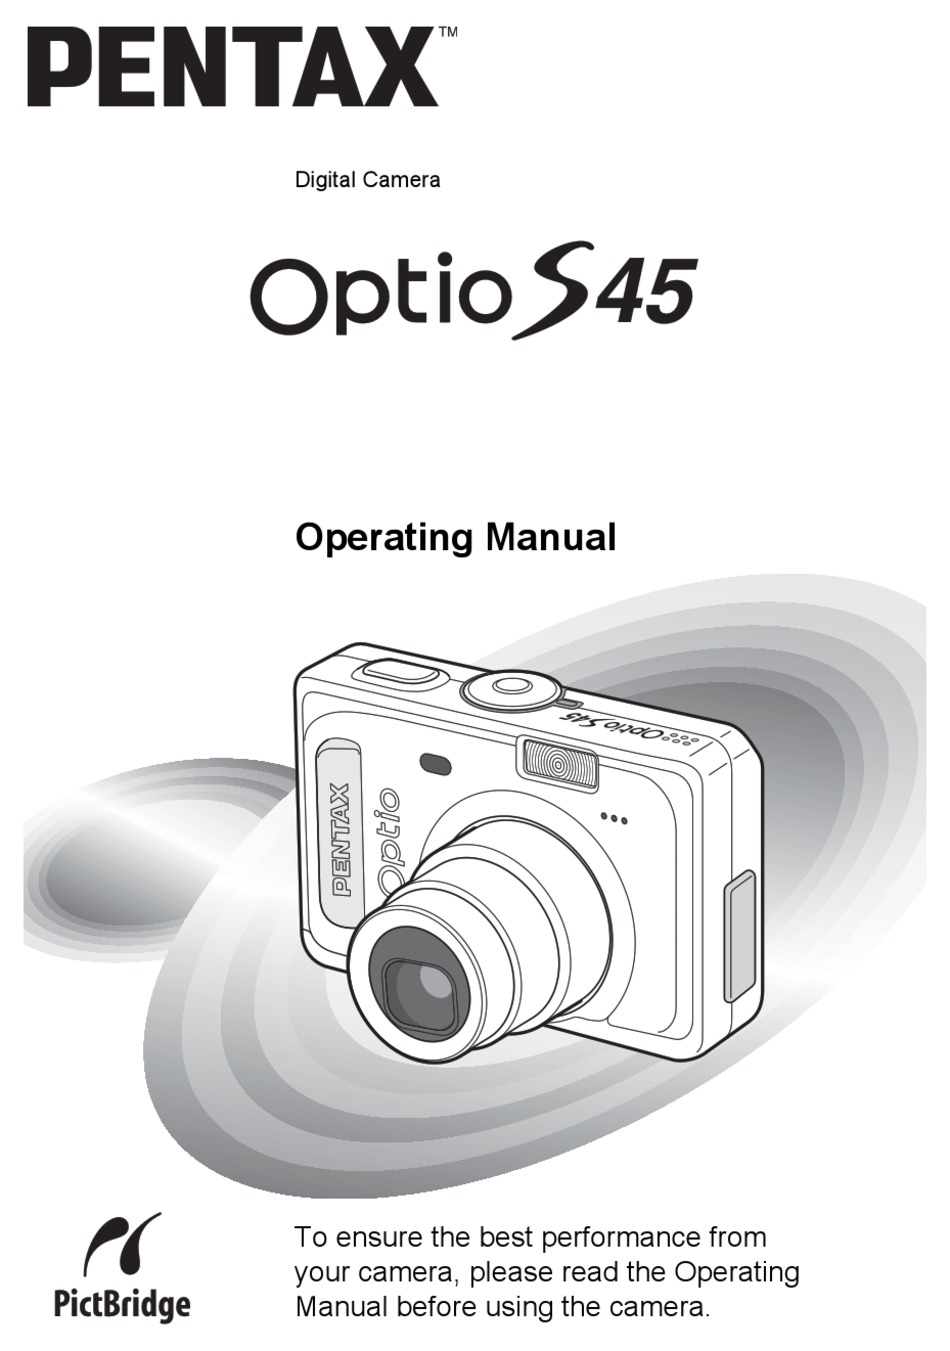 PENTAX OPTIO S45 OPERATING MANUAL Pdf Download | ManualsLib